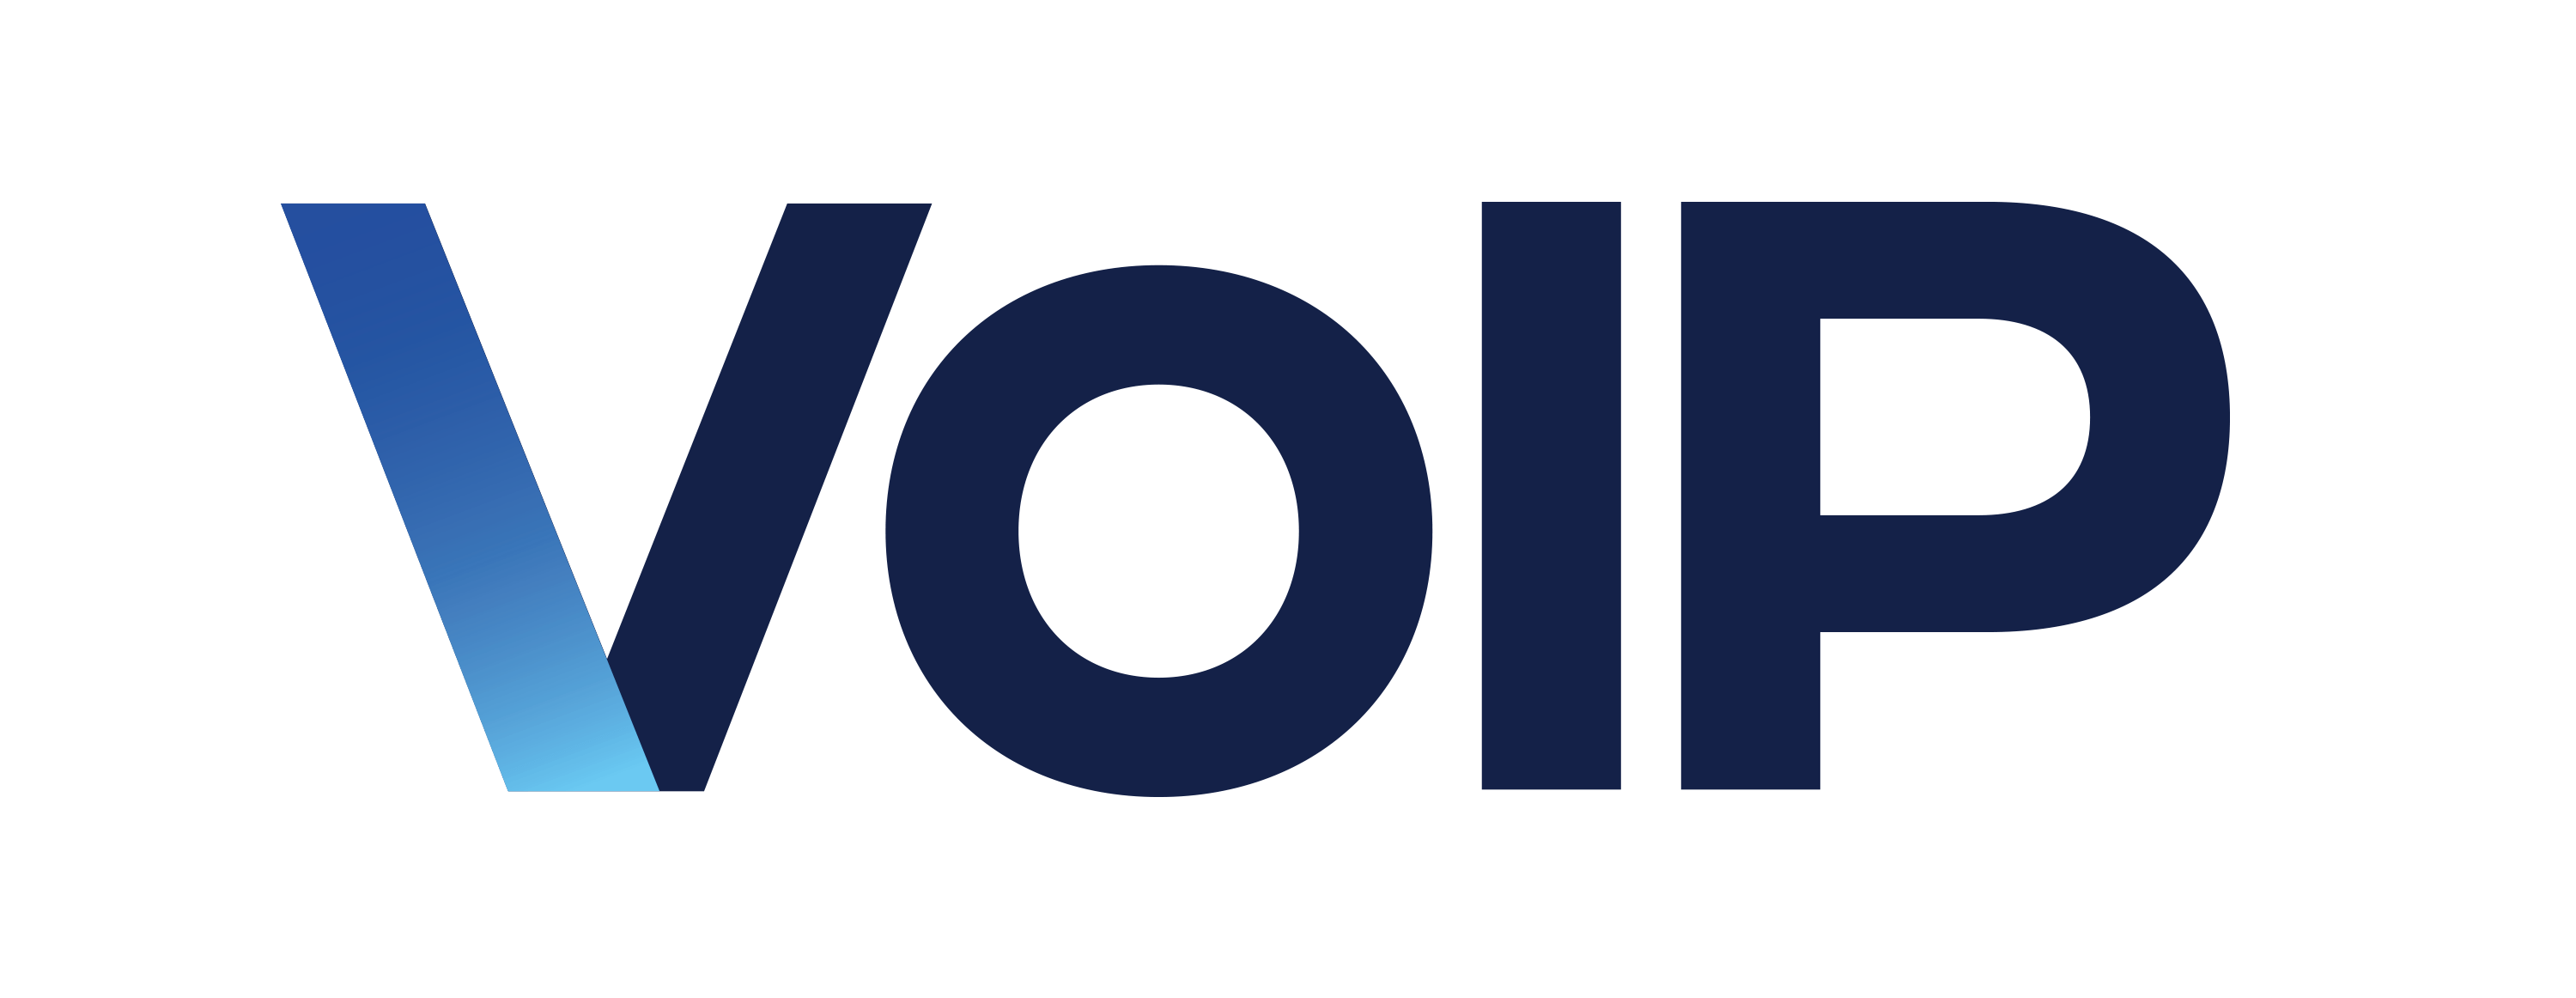 VoIP Logo - VoIP-Logo-RichBlue - Health Beyond Showcase